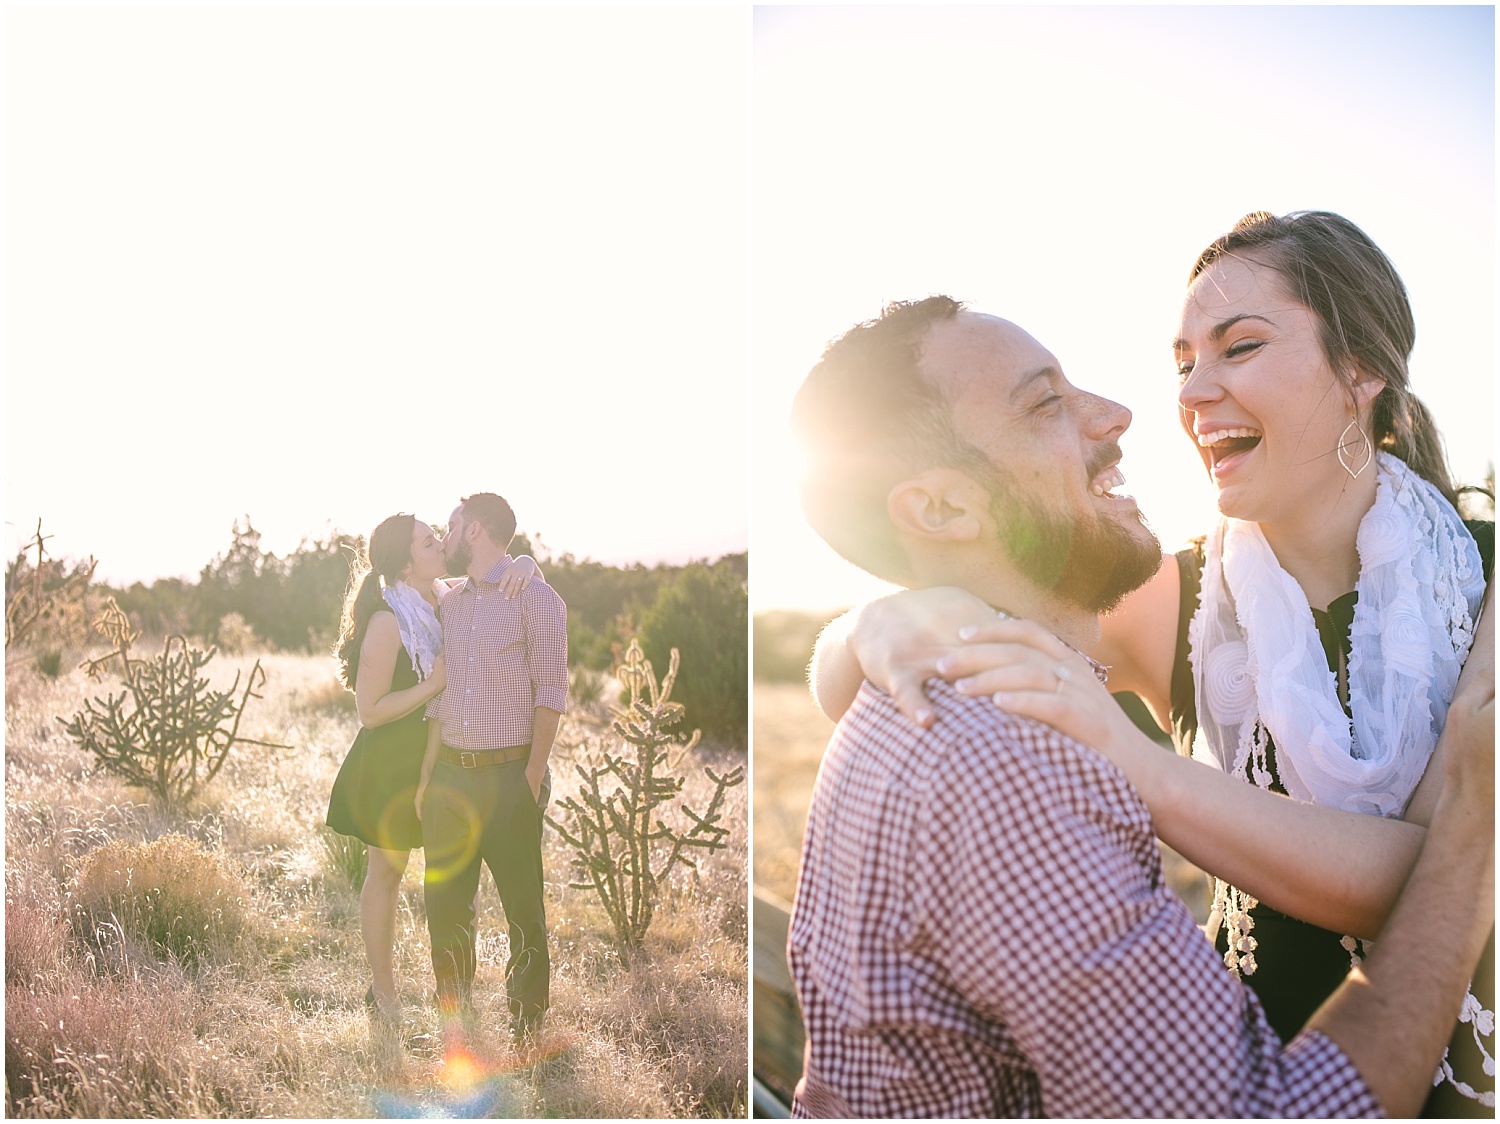 Sandia foothills engagement portraits at sunset in Albuquerque, New Mexico | Albuquerque wedding photographer